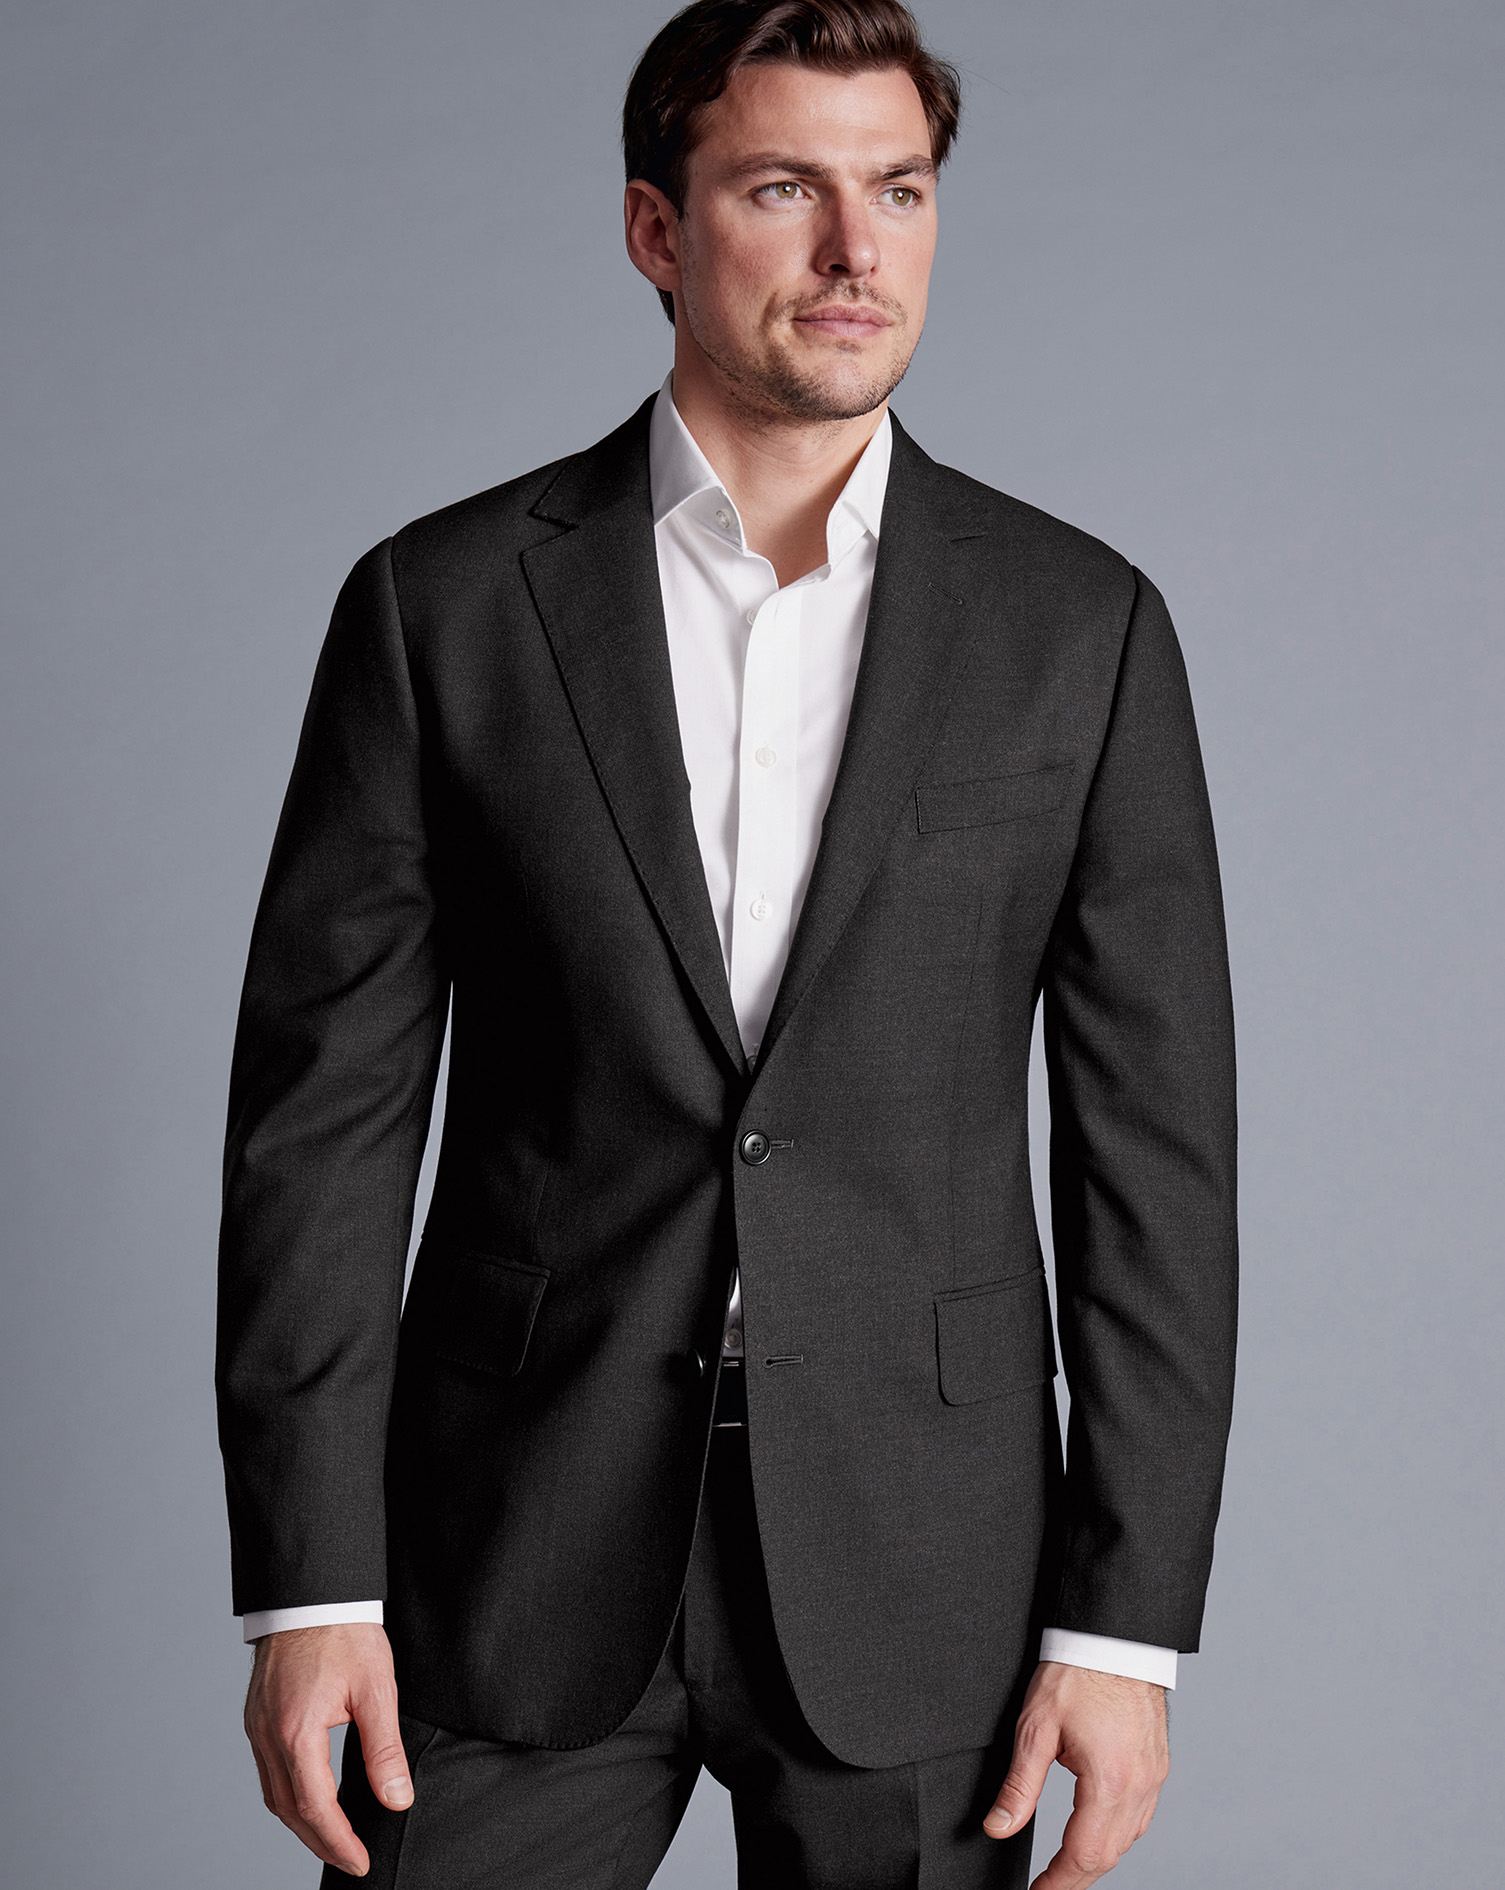 Men's Charles Tyrwhitt Italian Luxury Suit na Jacket - Charcoal Grey Size 36R Wool
